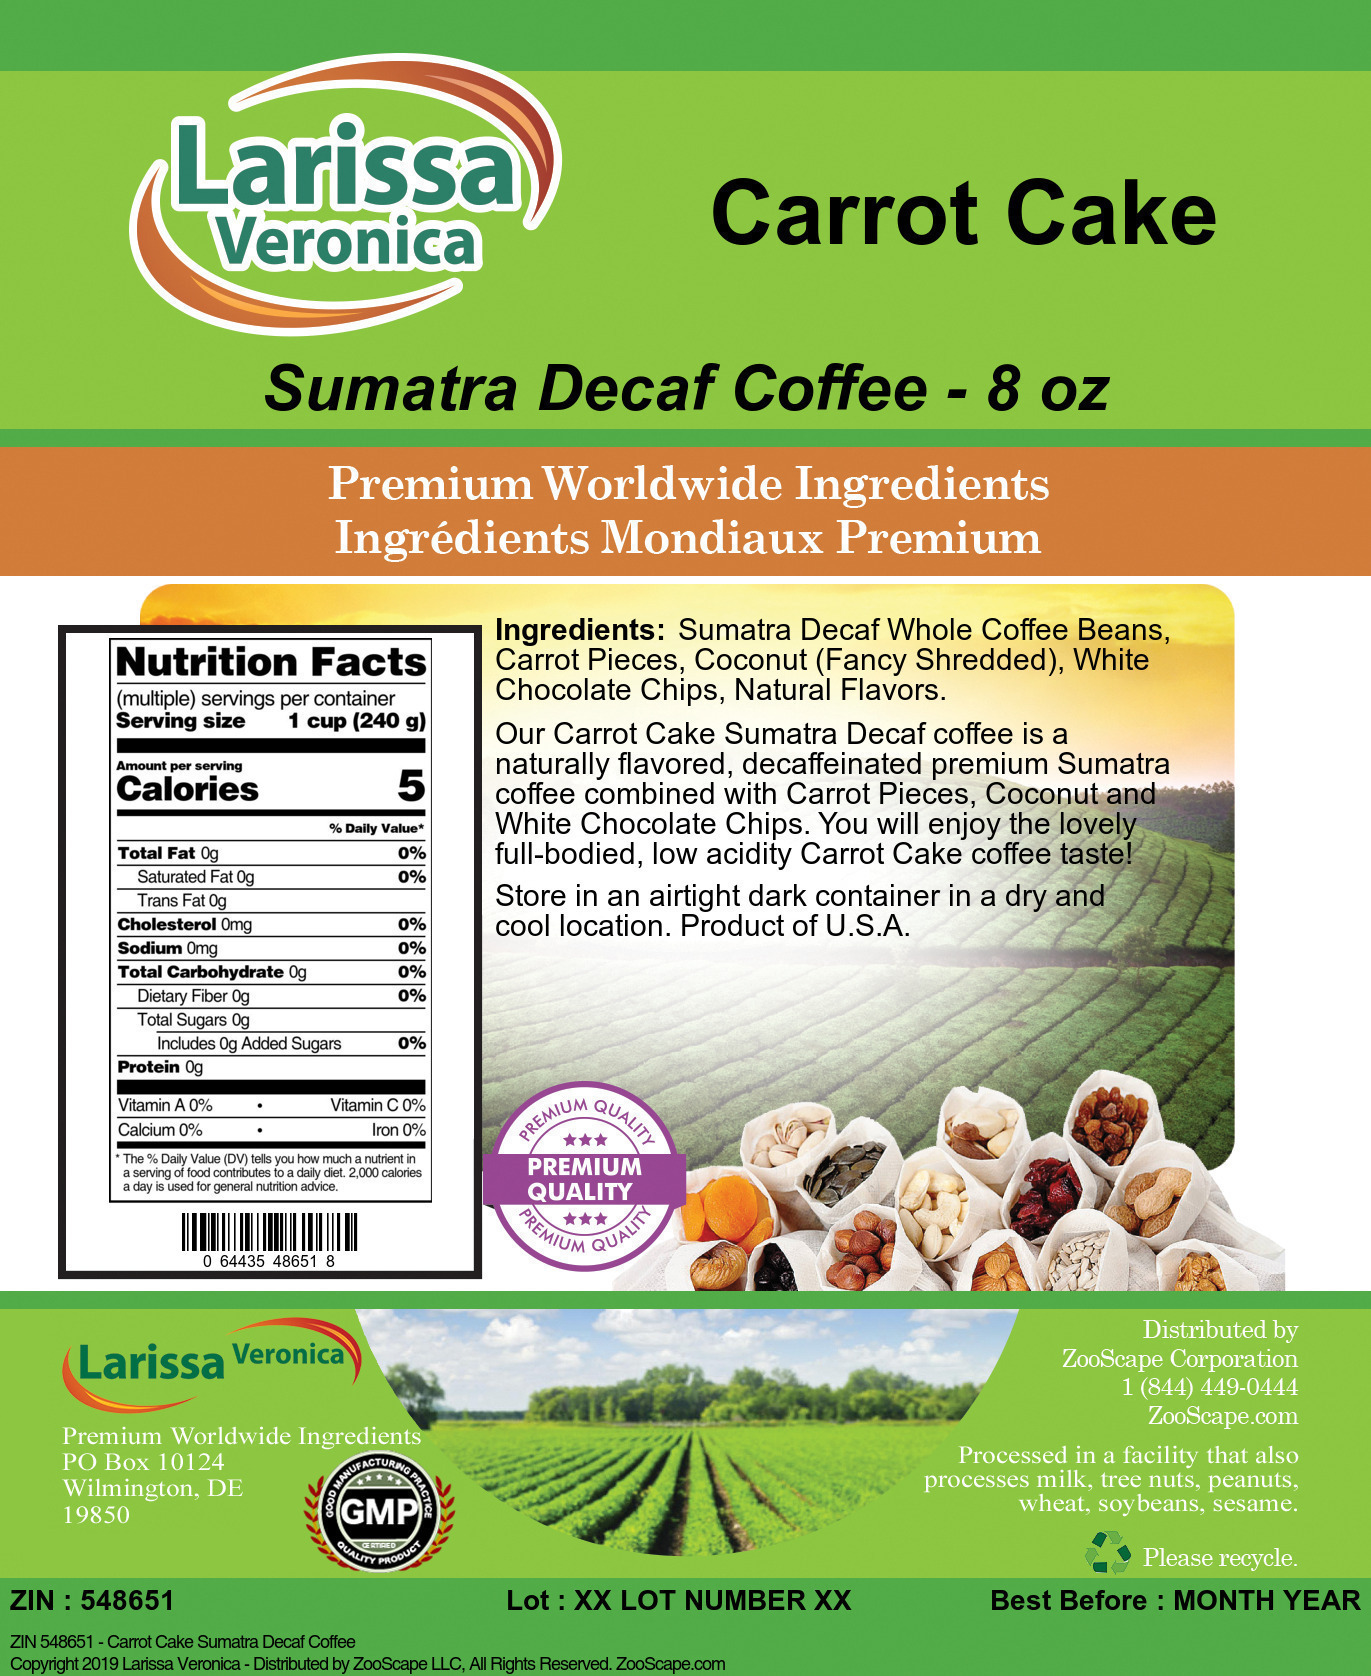 Carrot Cake Sumatra Decaf Coffee - Label